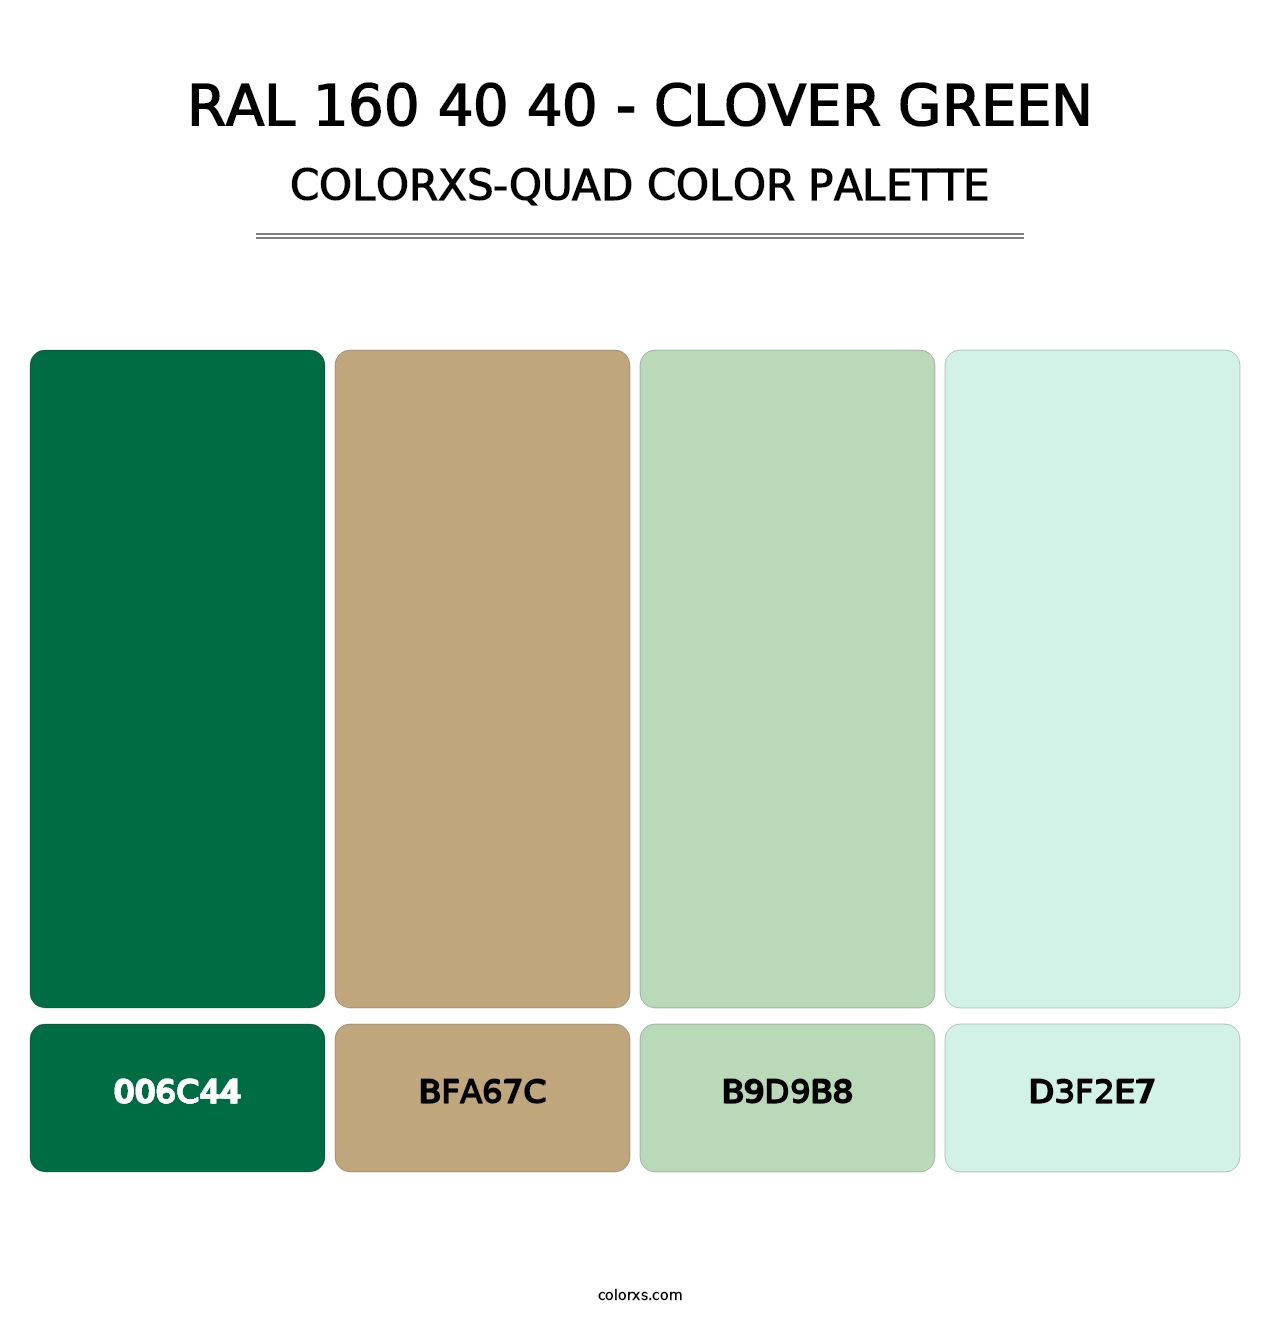 RAL 160 40 40 - Clover Green - Colorxs Quad Palette